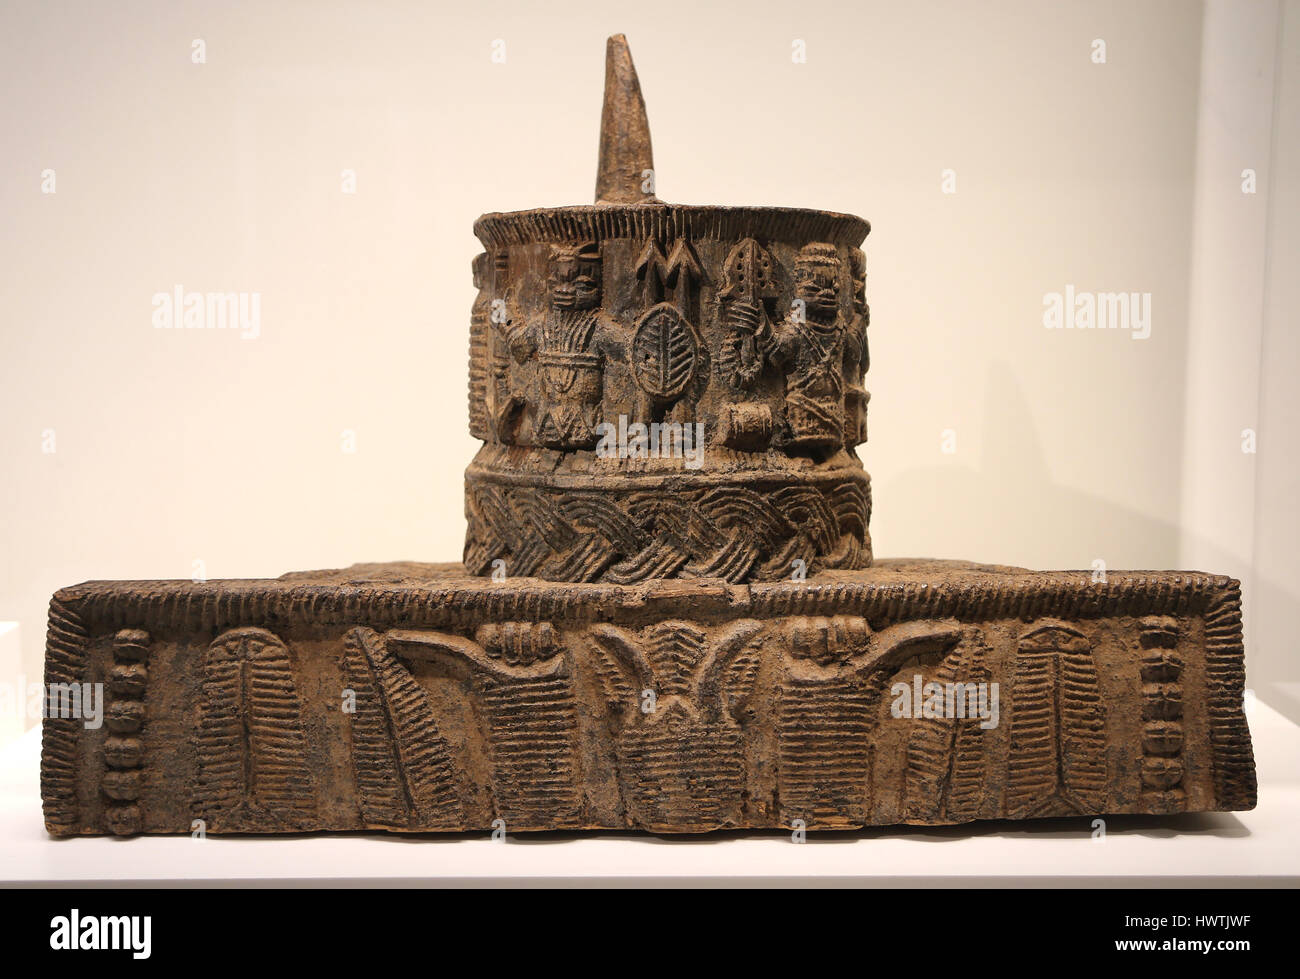 Altar a la mano. Siglo xix, Ikegobo. Benin Imperio, Edo. Nigeria. Madera tallada Foto de stock